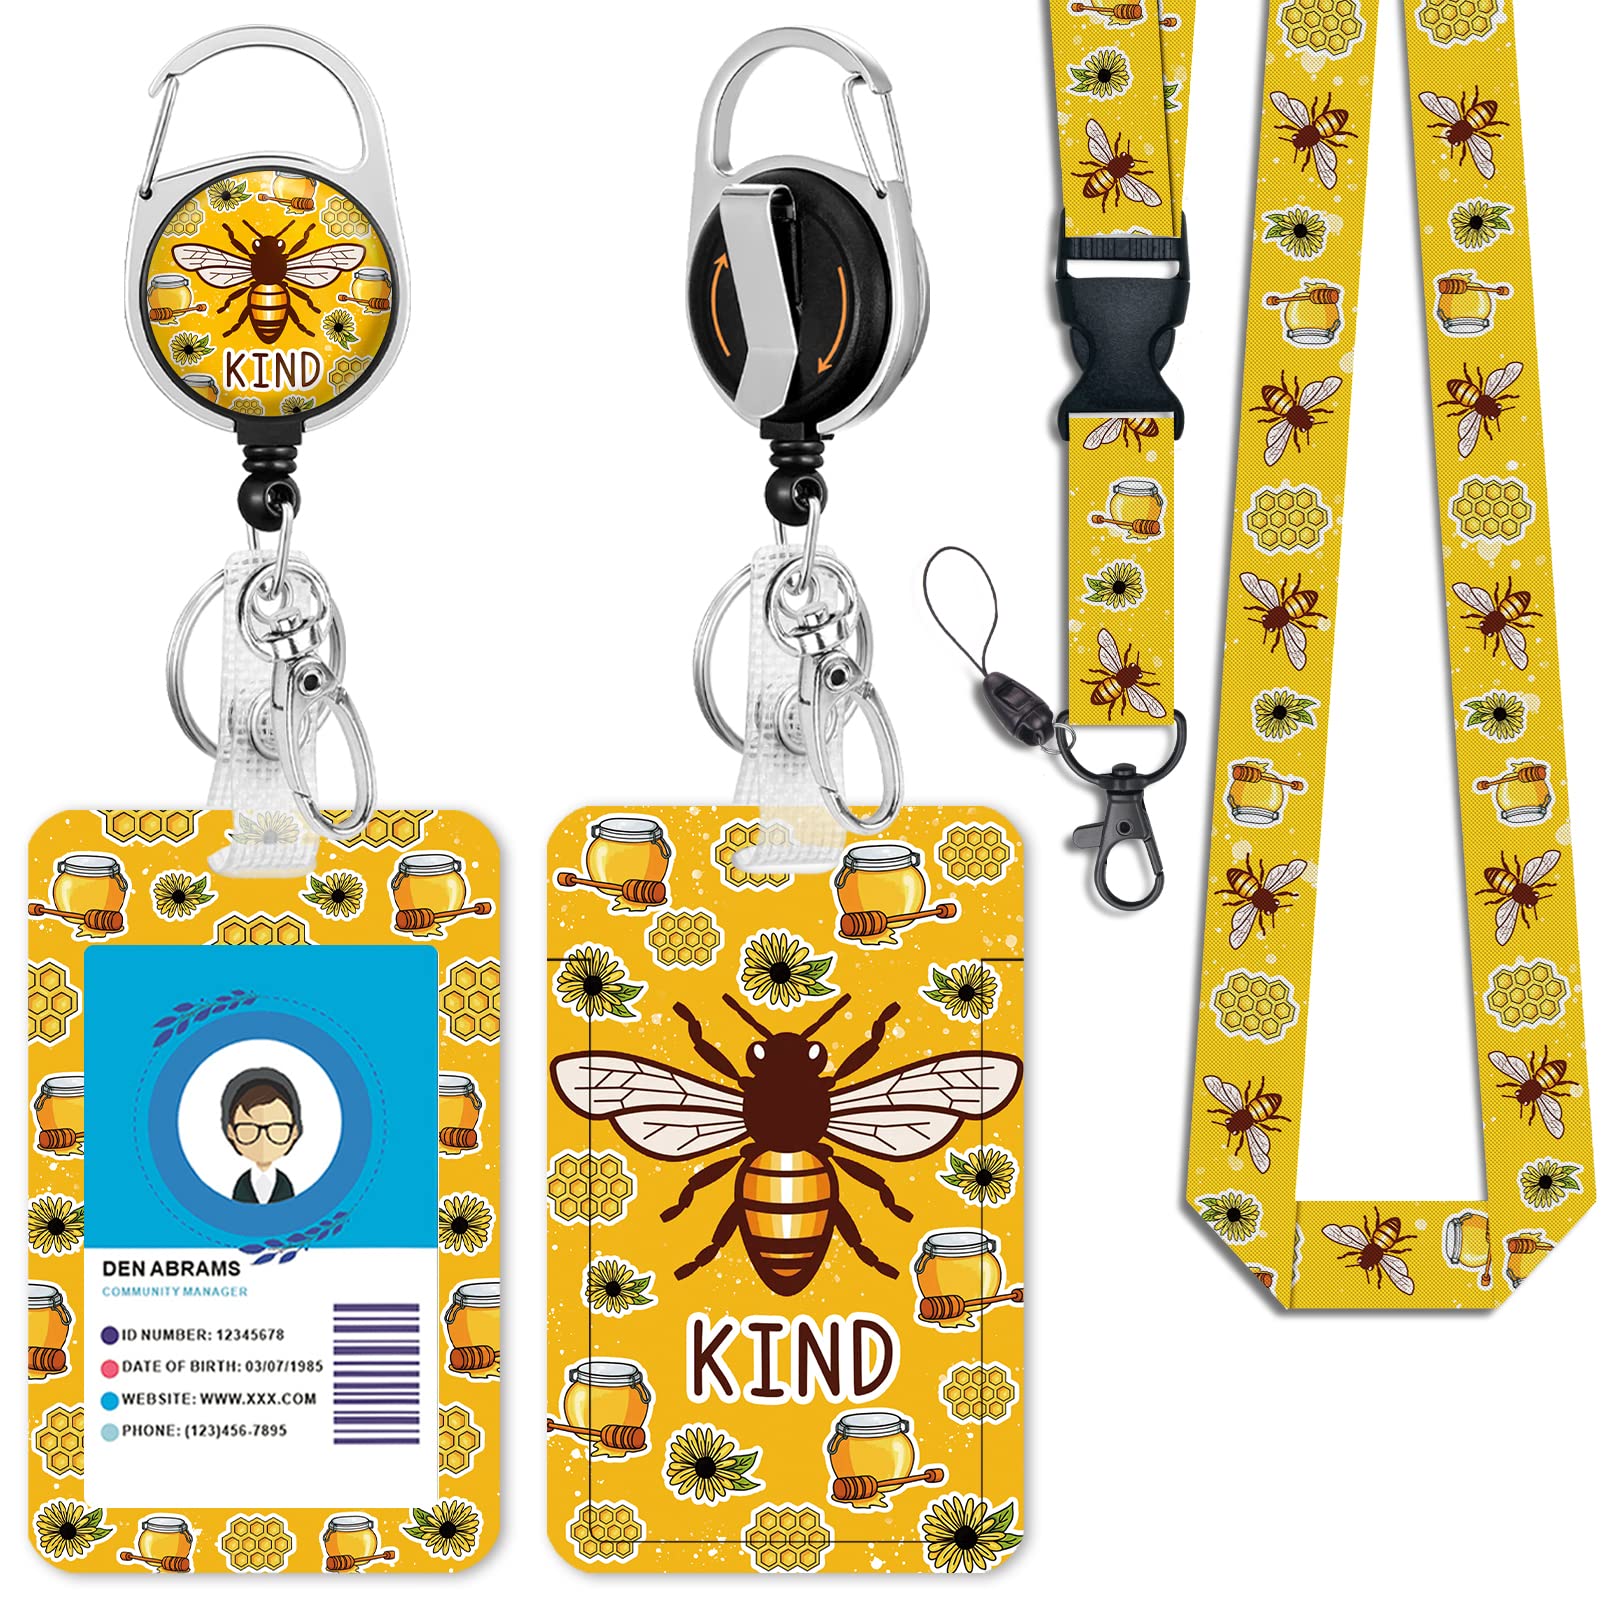 Amazon.com : Cute Bee Kind Lanyards for Id Badges, Retractable ID ...